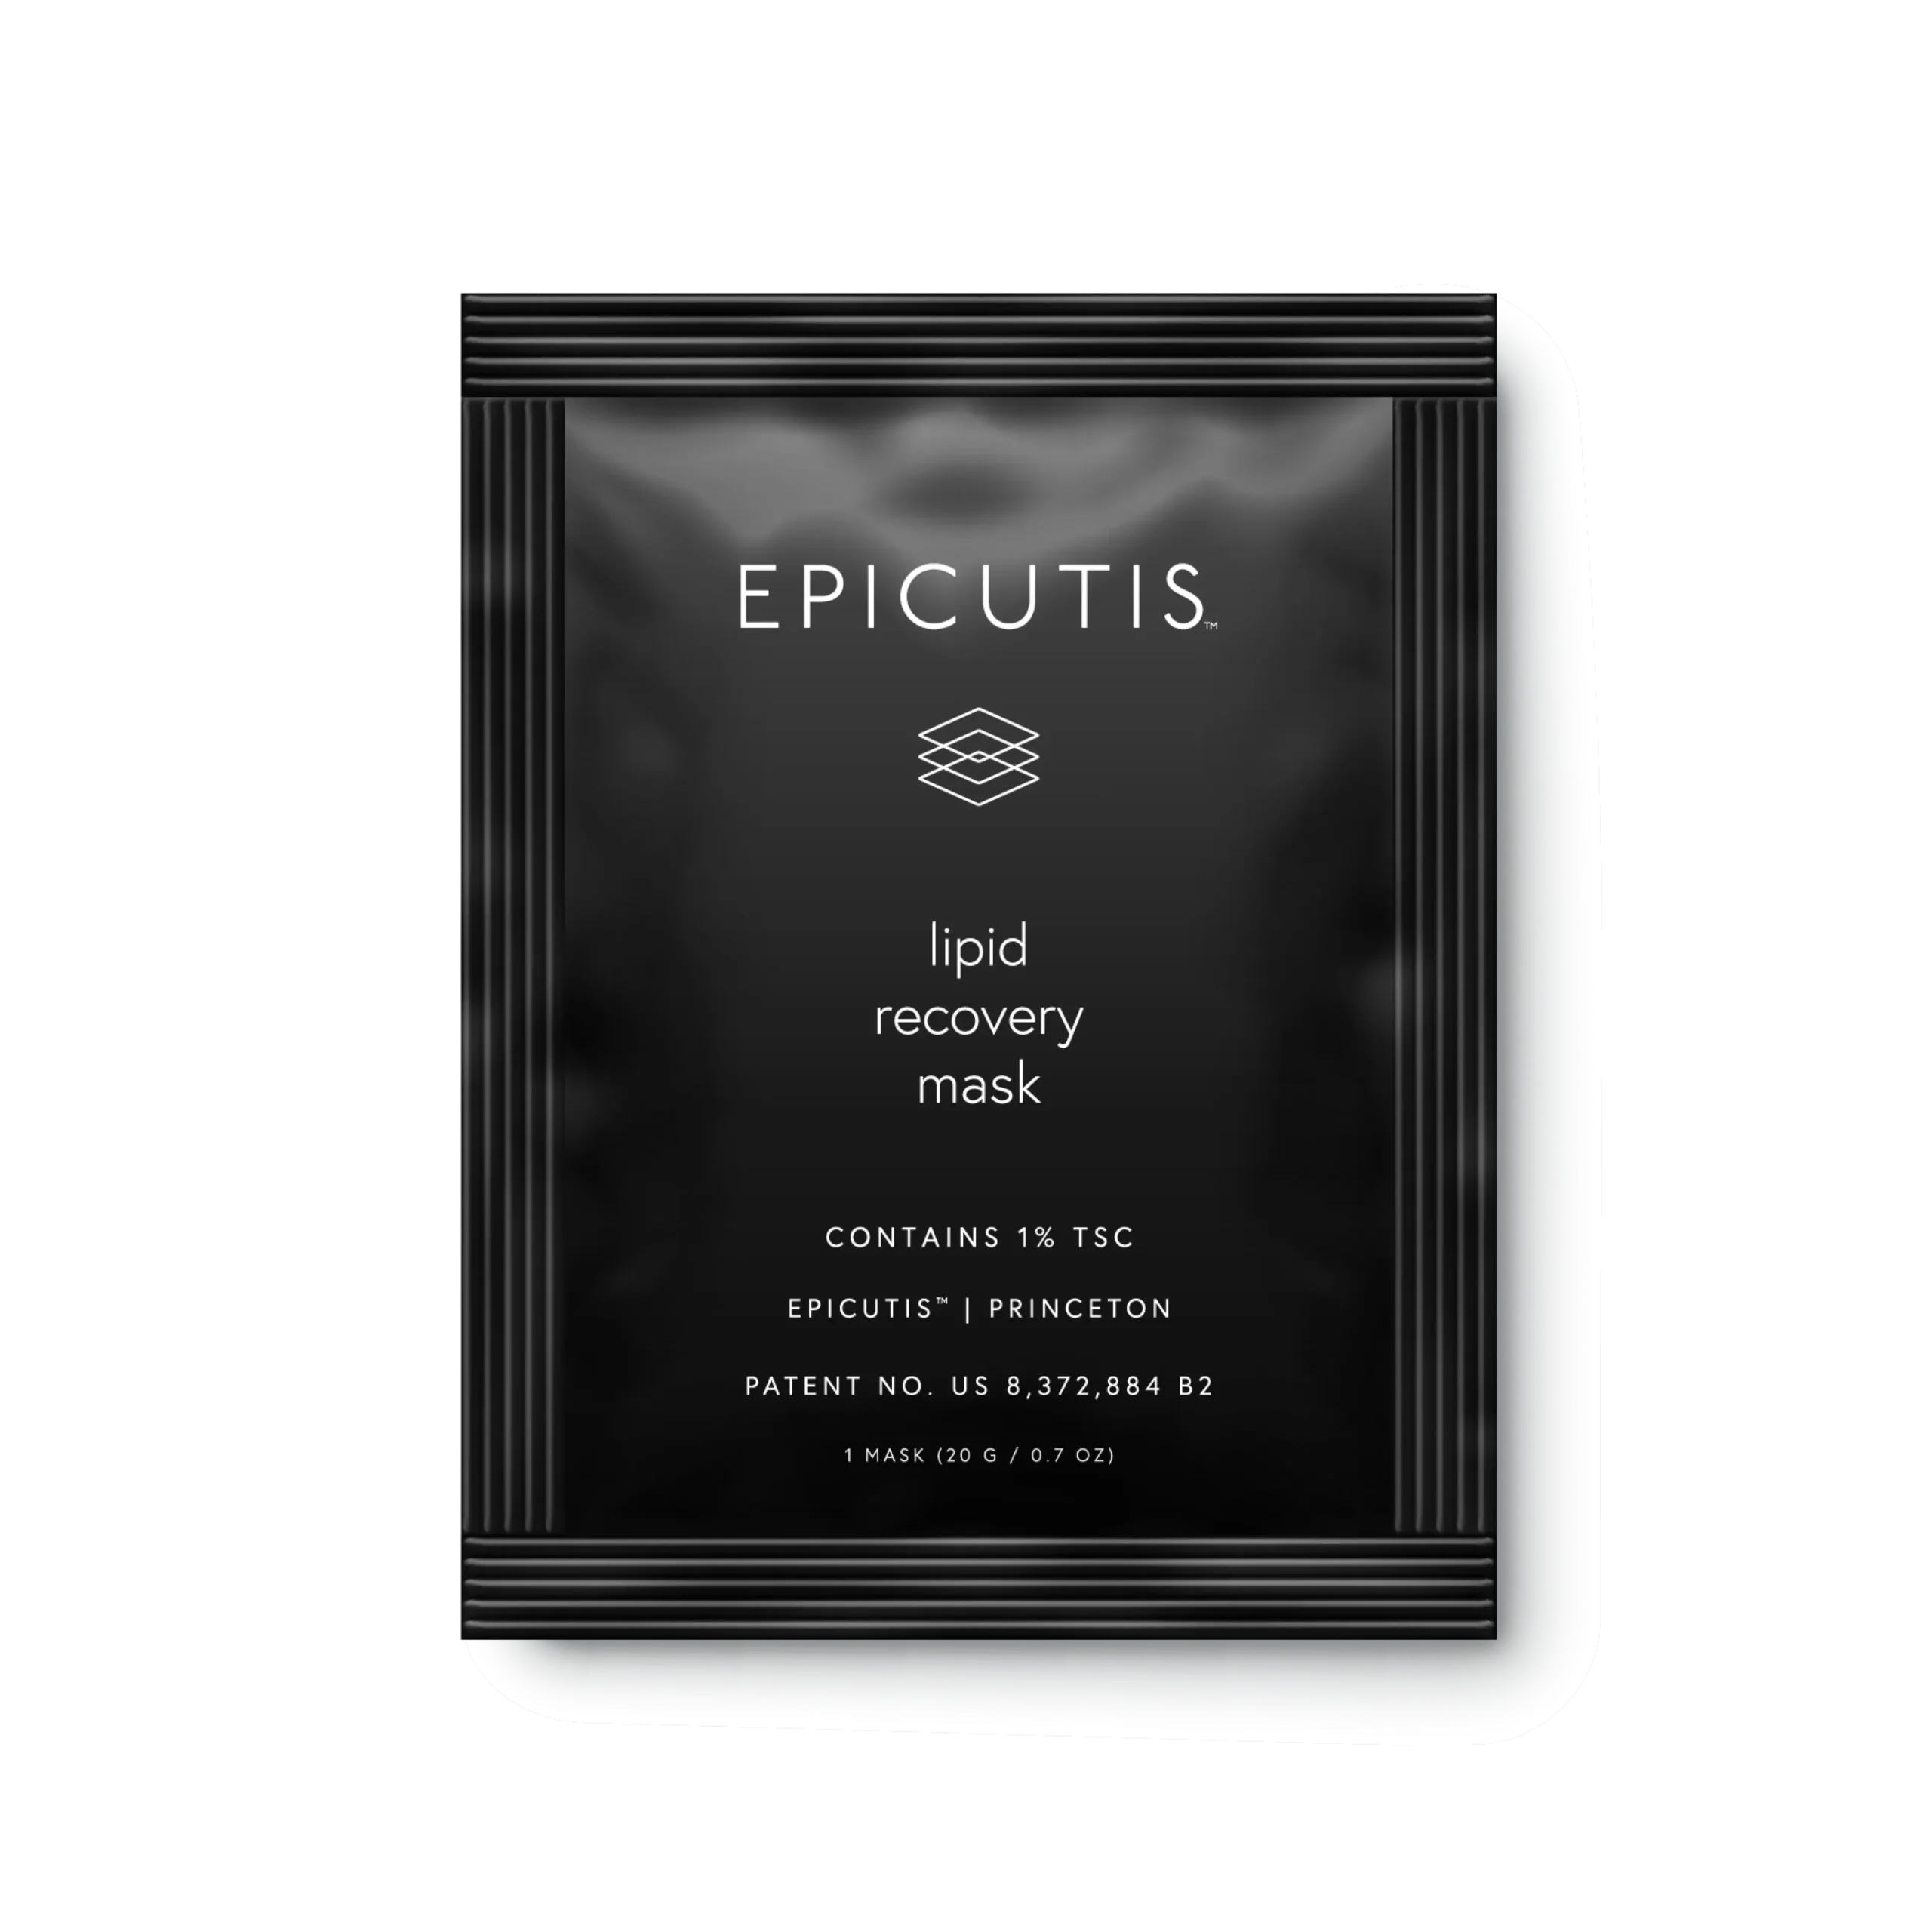 Epicutis: Lipid Recovery Mask